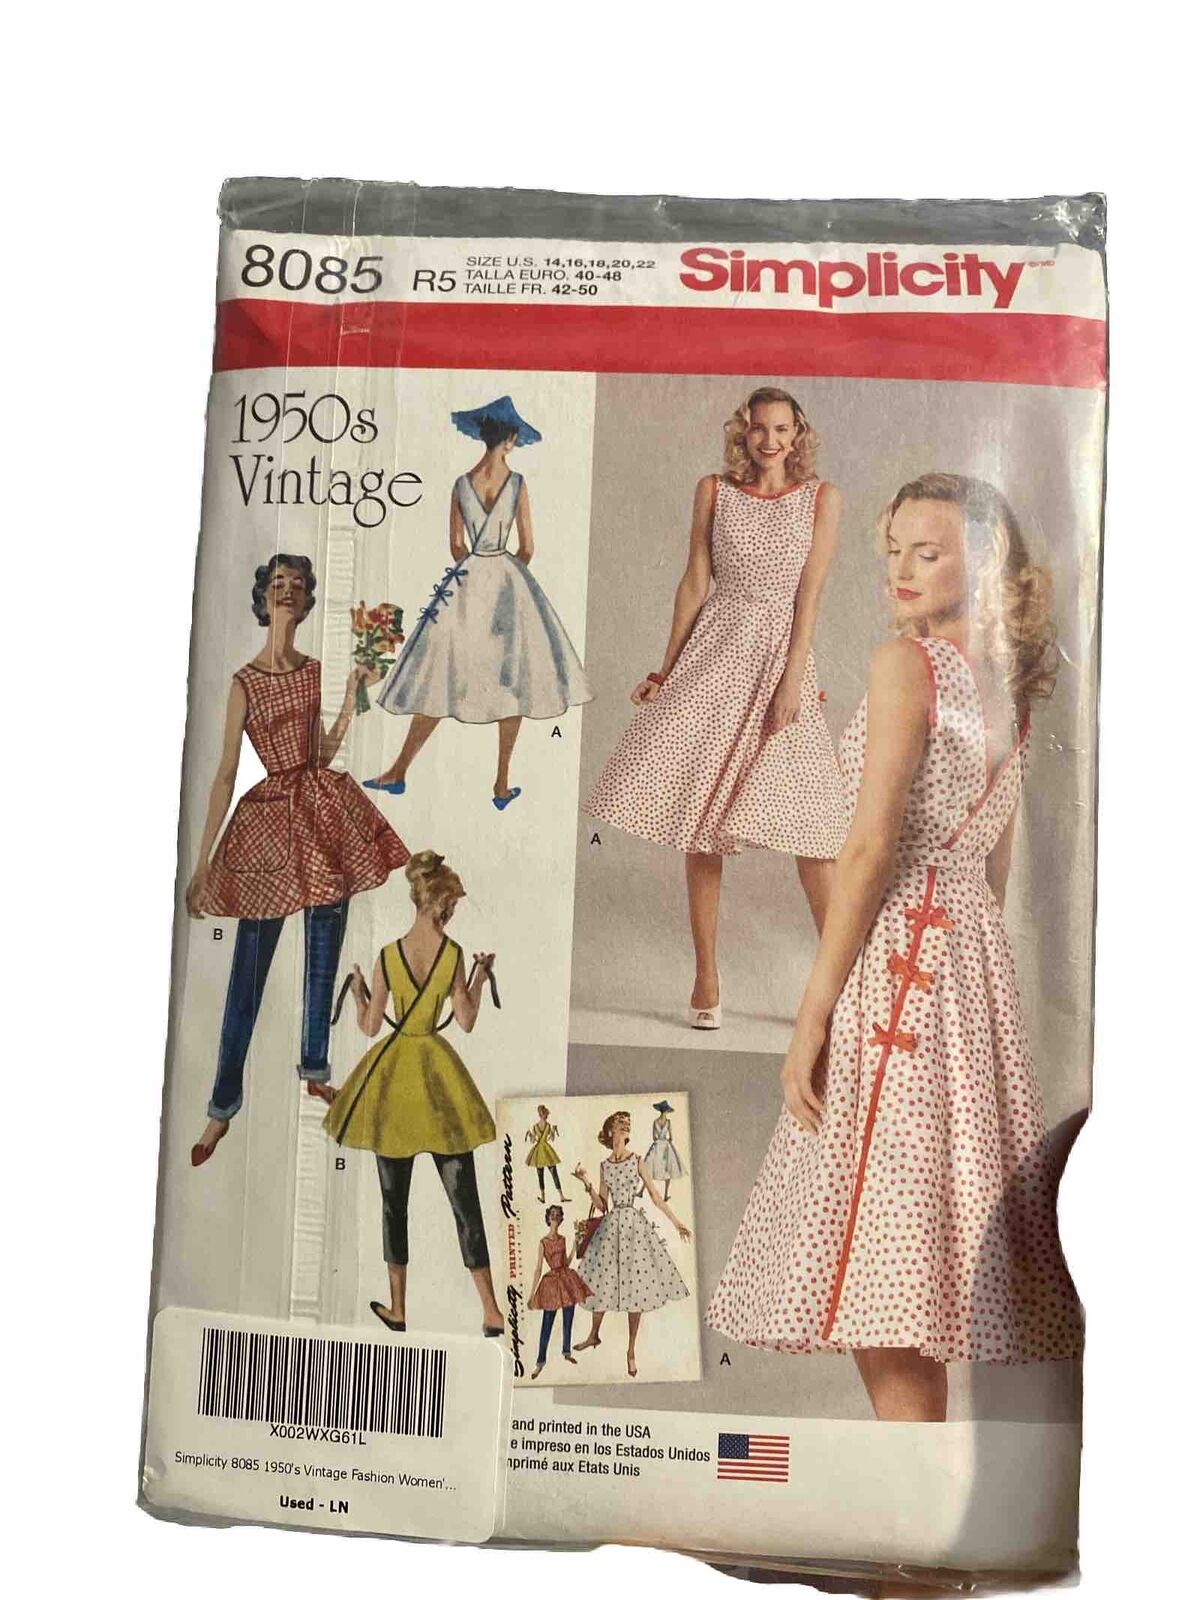 Simplicity Pattern 1950s Wrap Dress 8085 R5 Size 14-22 UNCUT pinup rockabilly